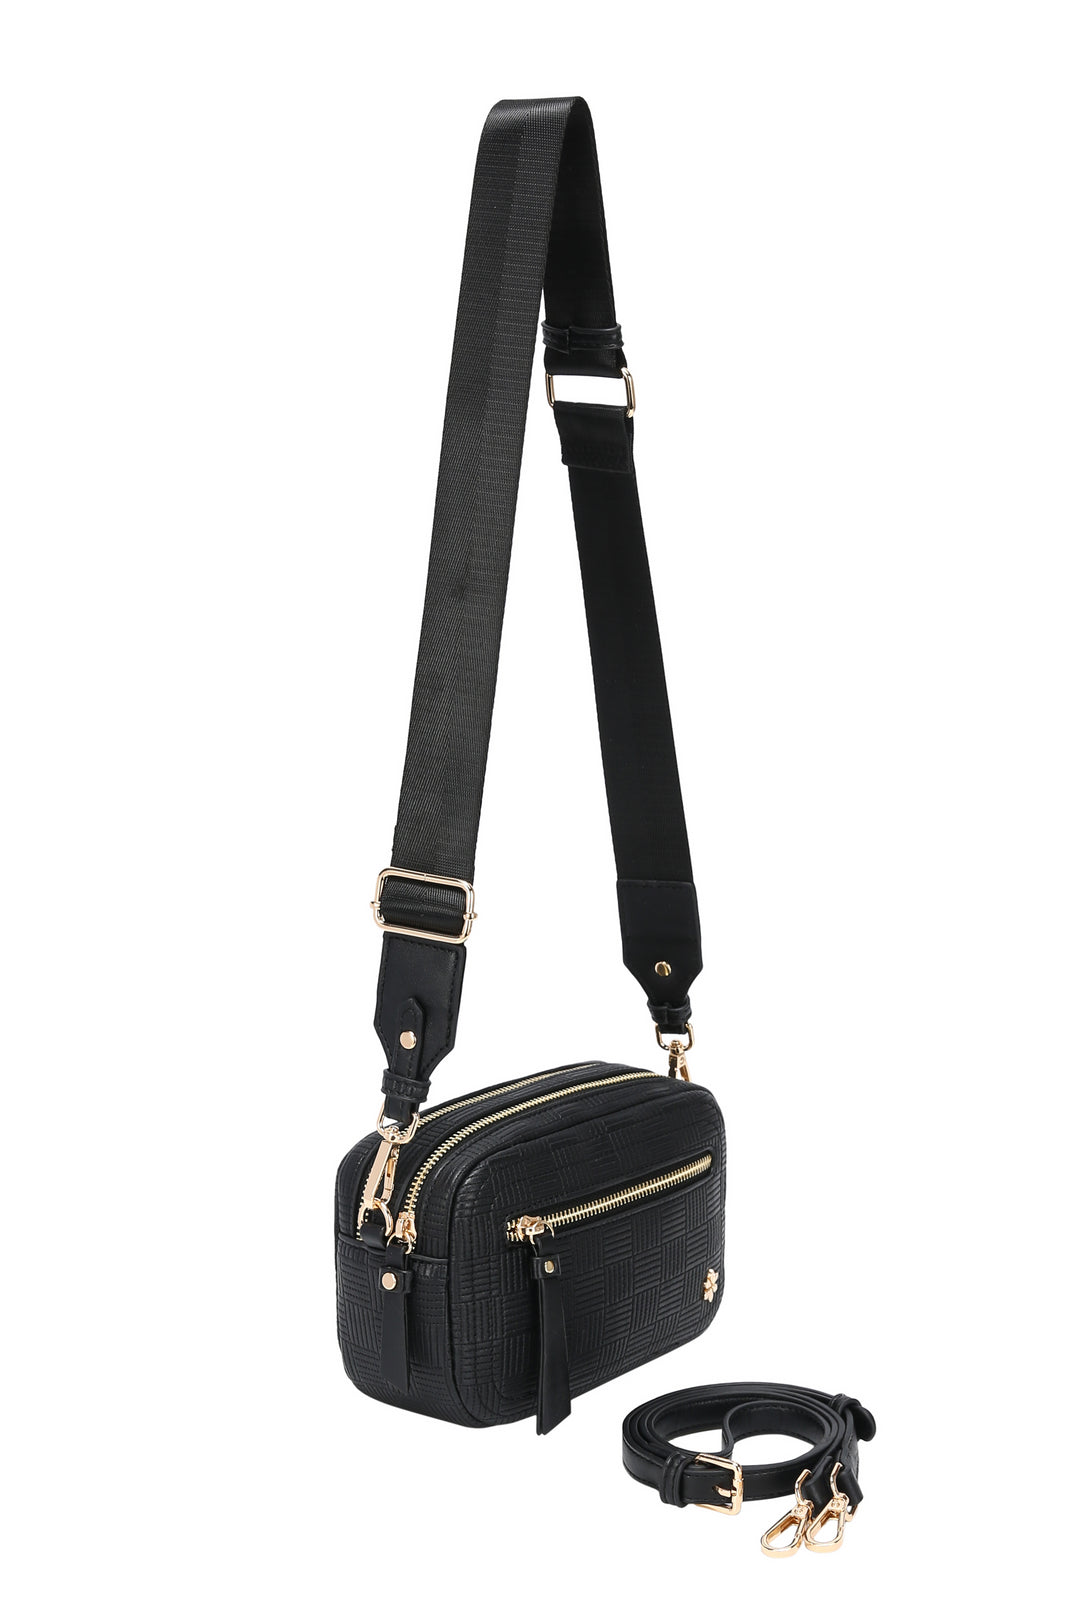 Dual zipper Cross body Shoulder bag with 2 shoulder straps- PU Vegan leather